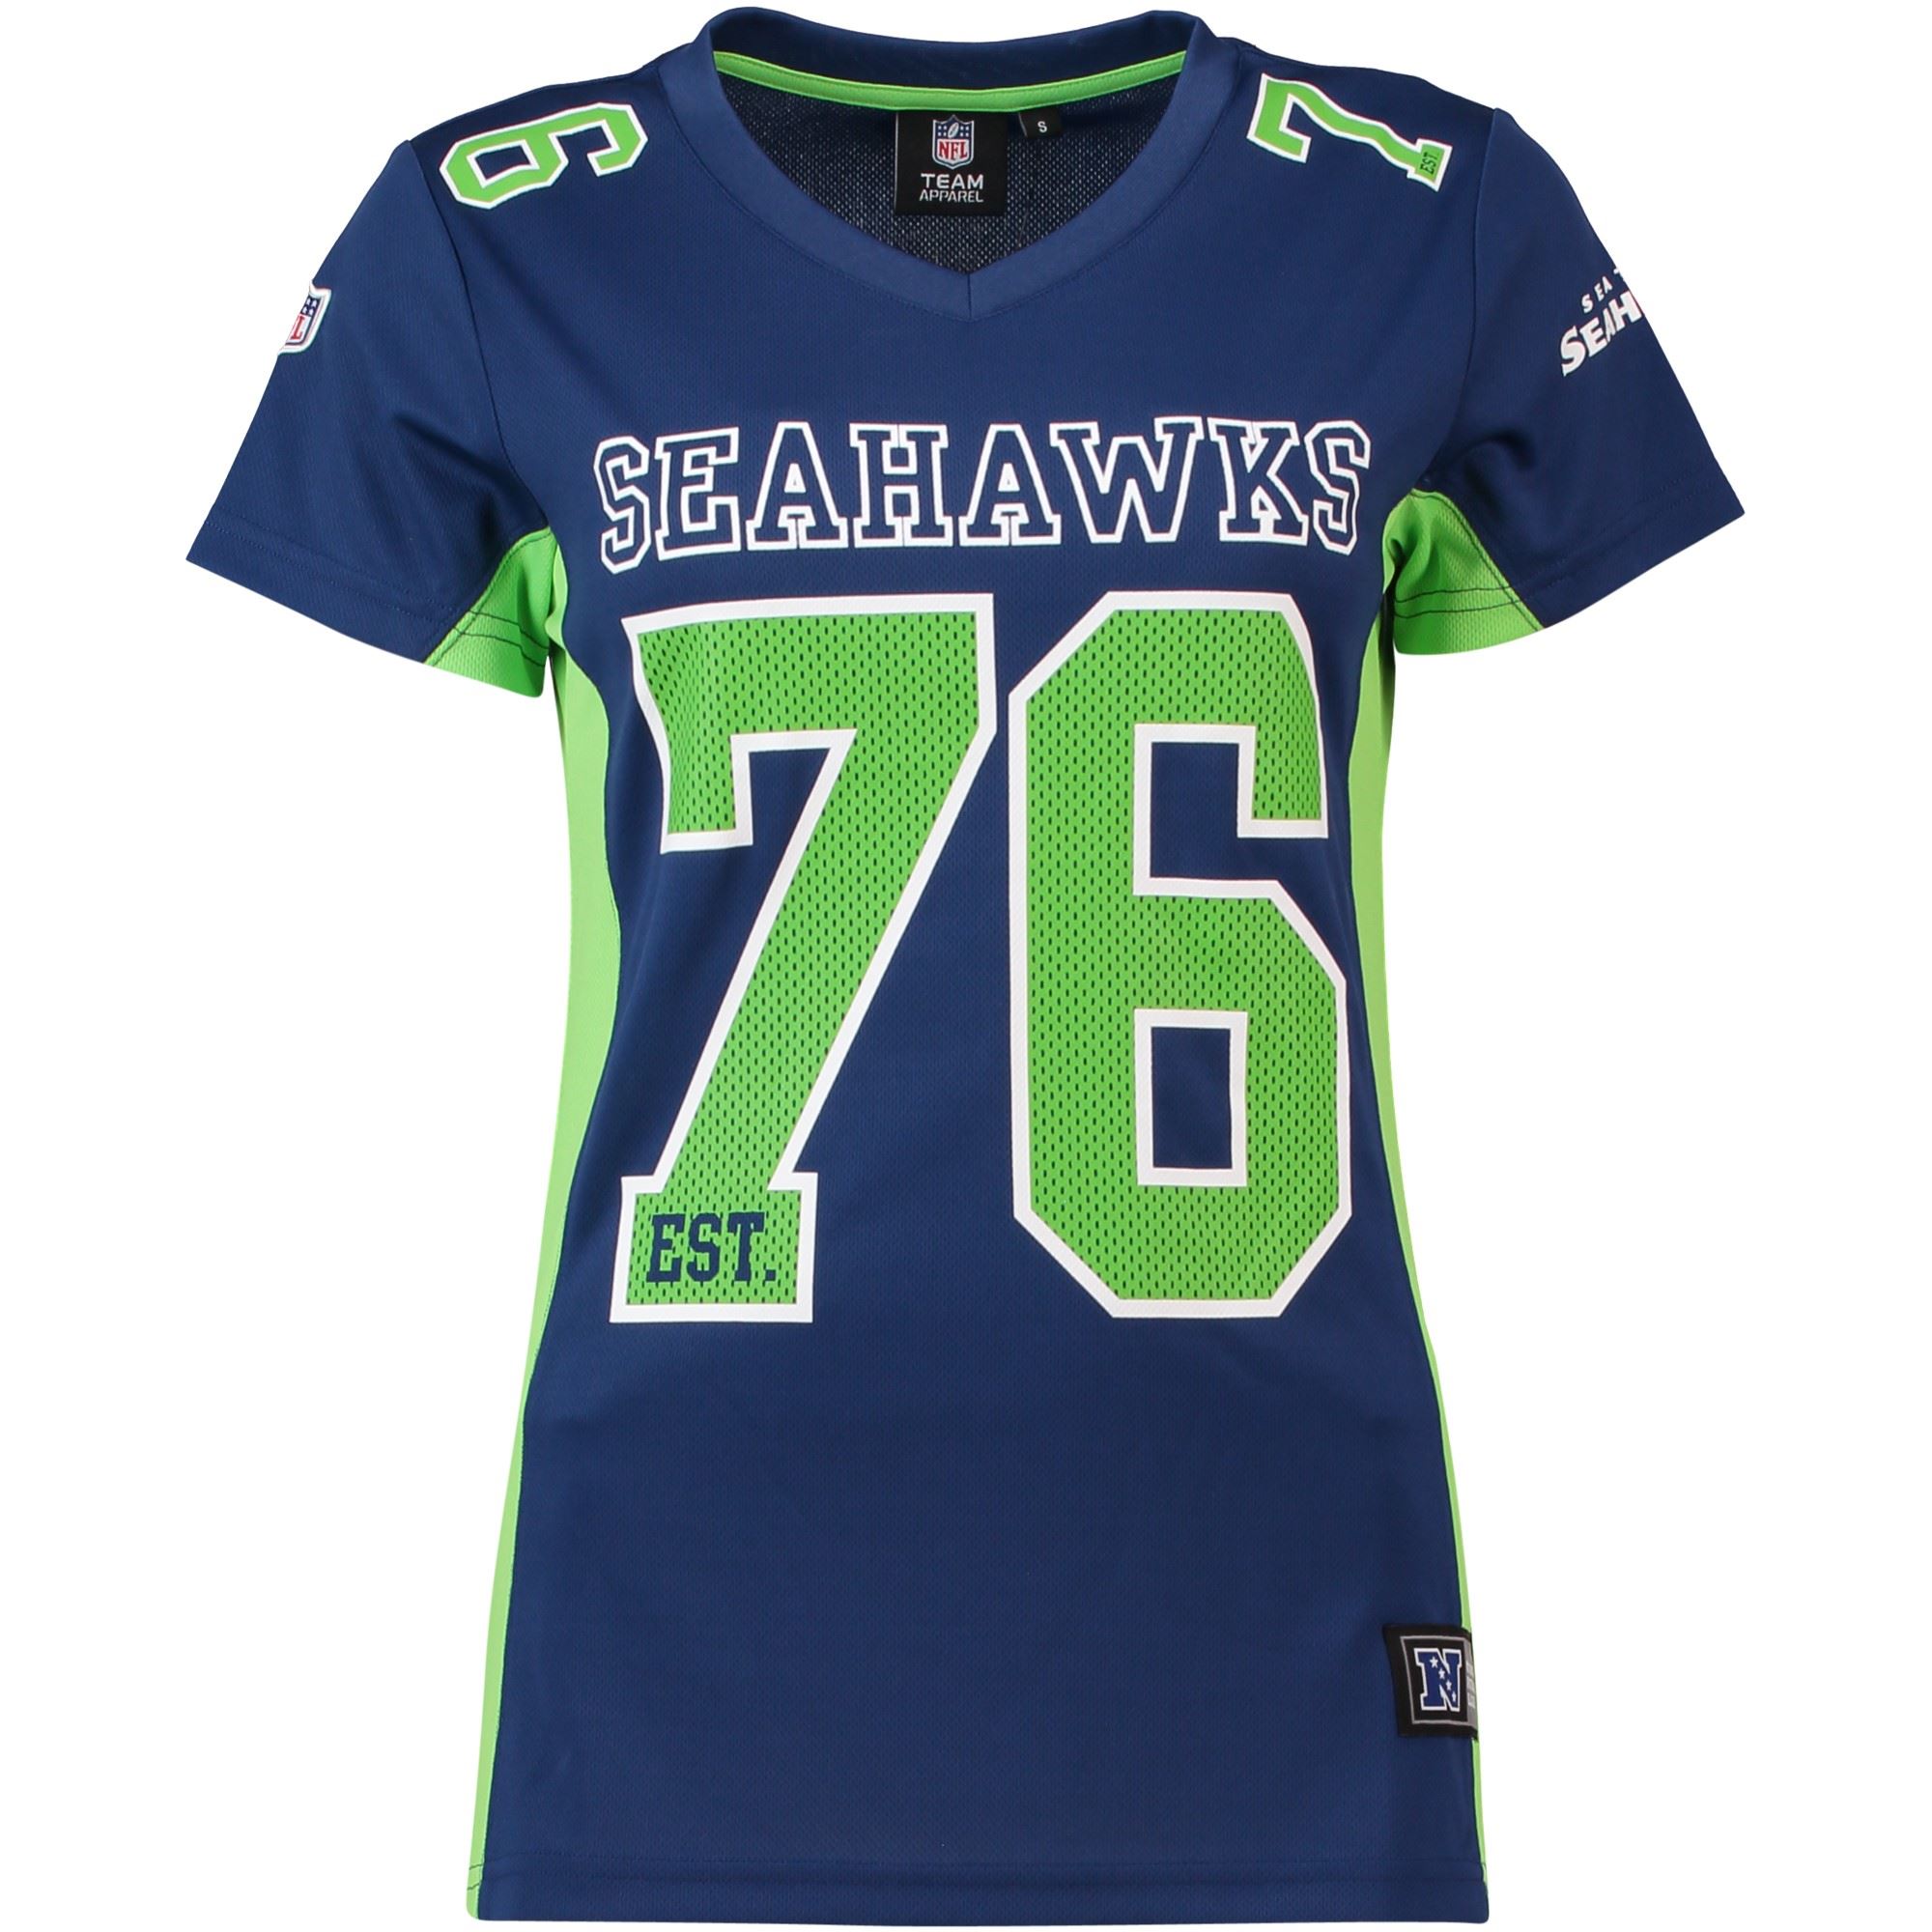 Seattle Seahawks NFL Majestic Players Poly Mesh T-Shirt Women Collection Fanatics